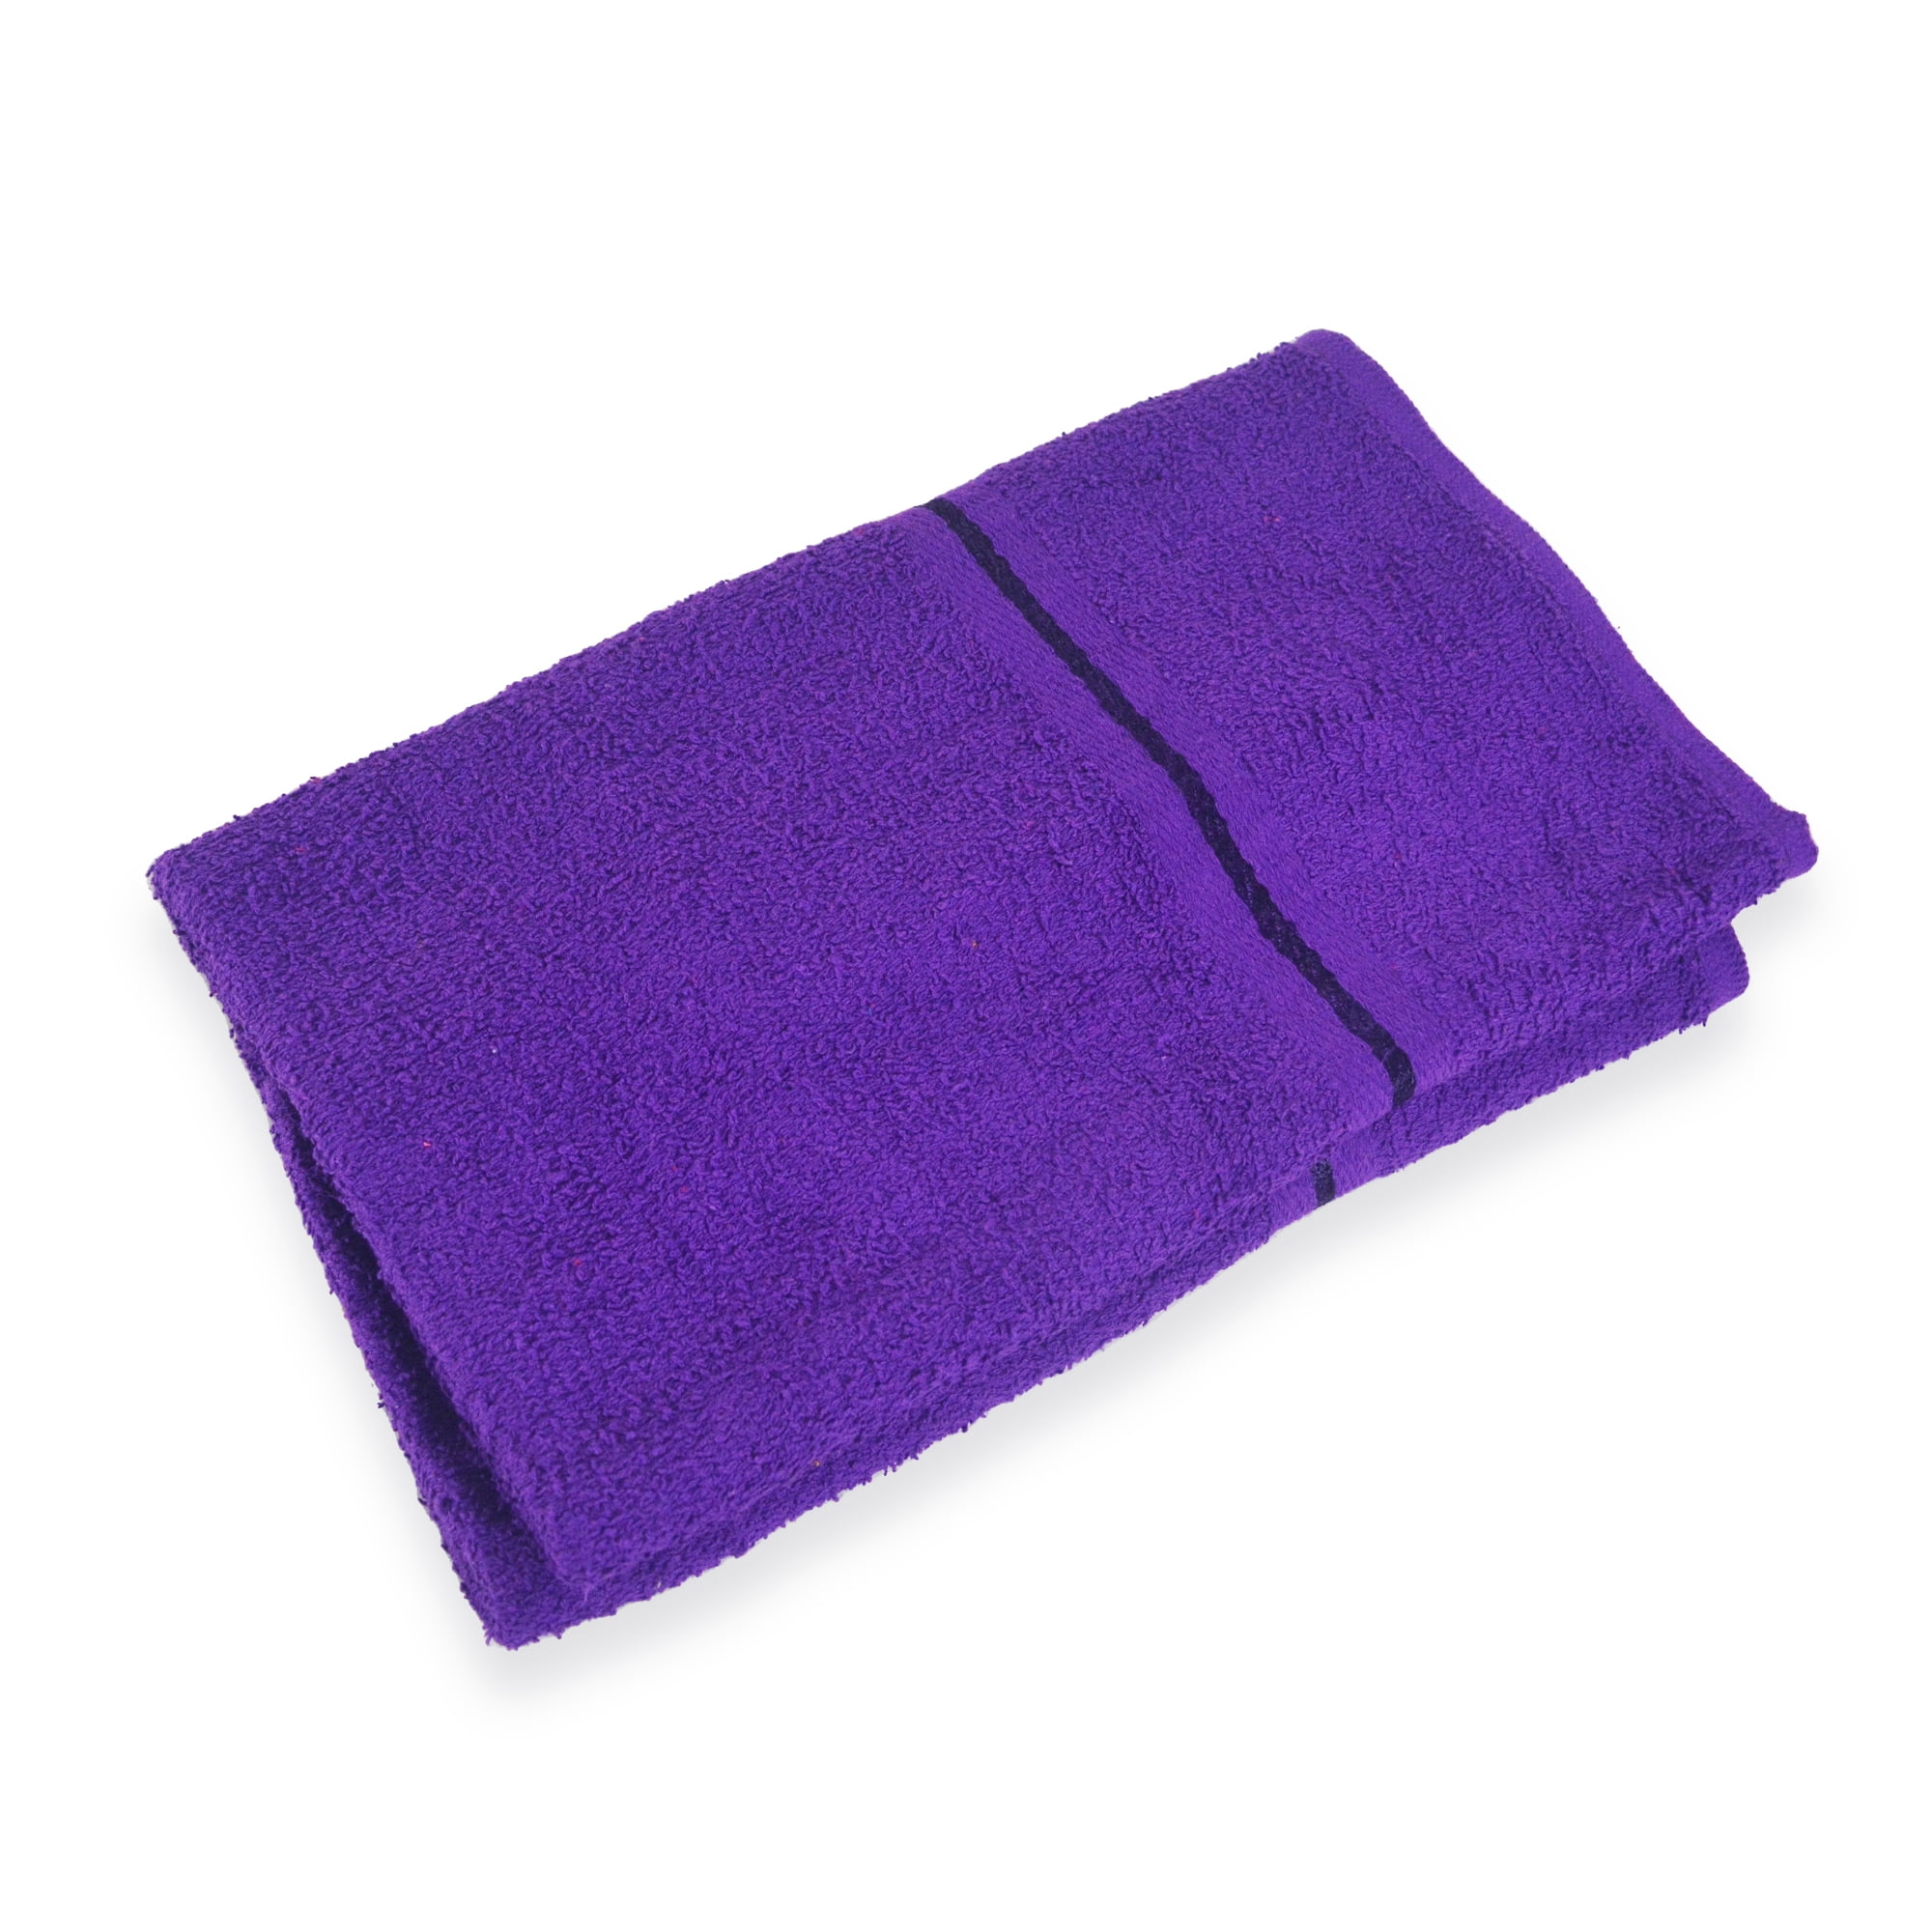 https://loomylane.com/wp-content/uploads/2023/03/Medium-Large-Towels-Purple.jpg